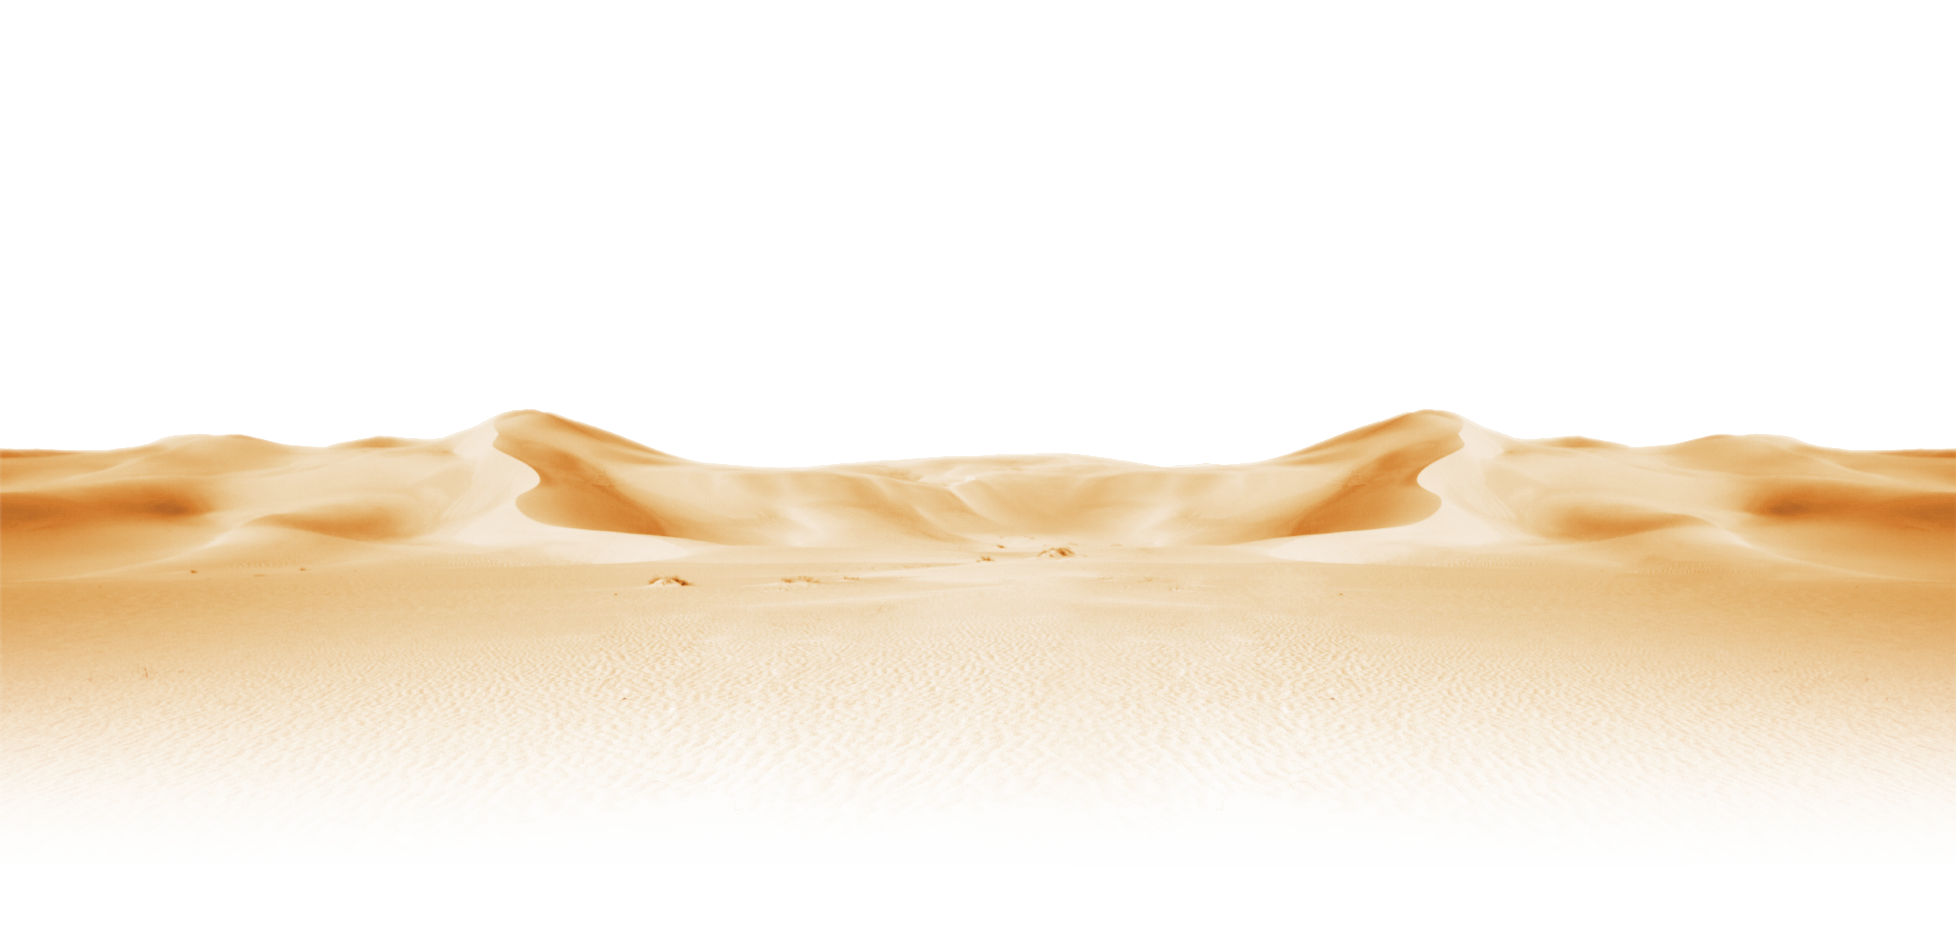 Desert clipart desert sand.  collection of images